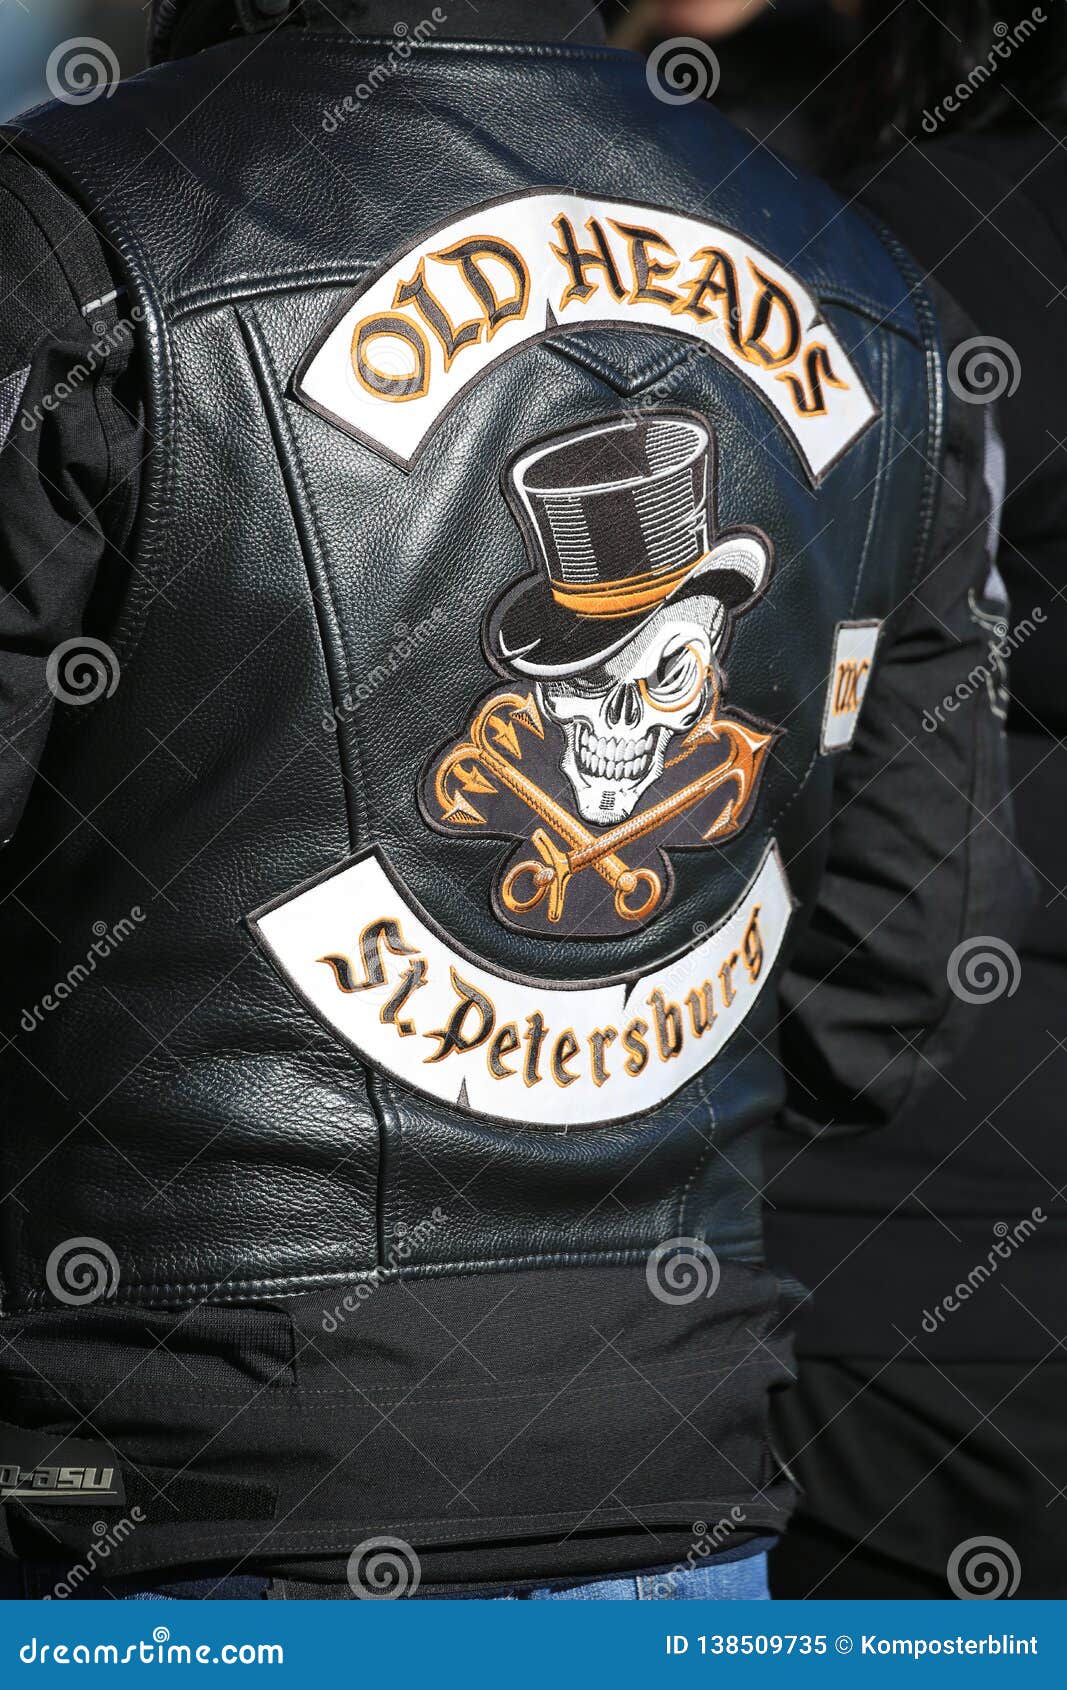 F 134 Firefighter Motorcycle Vest Patch 6.5" Large Crest Biker Jacket Leather 